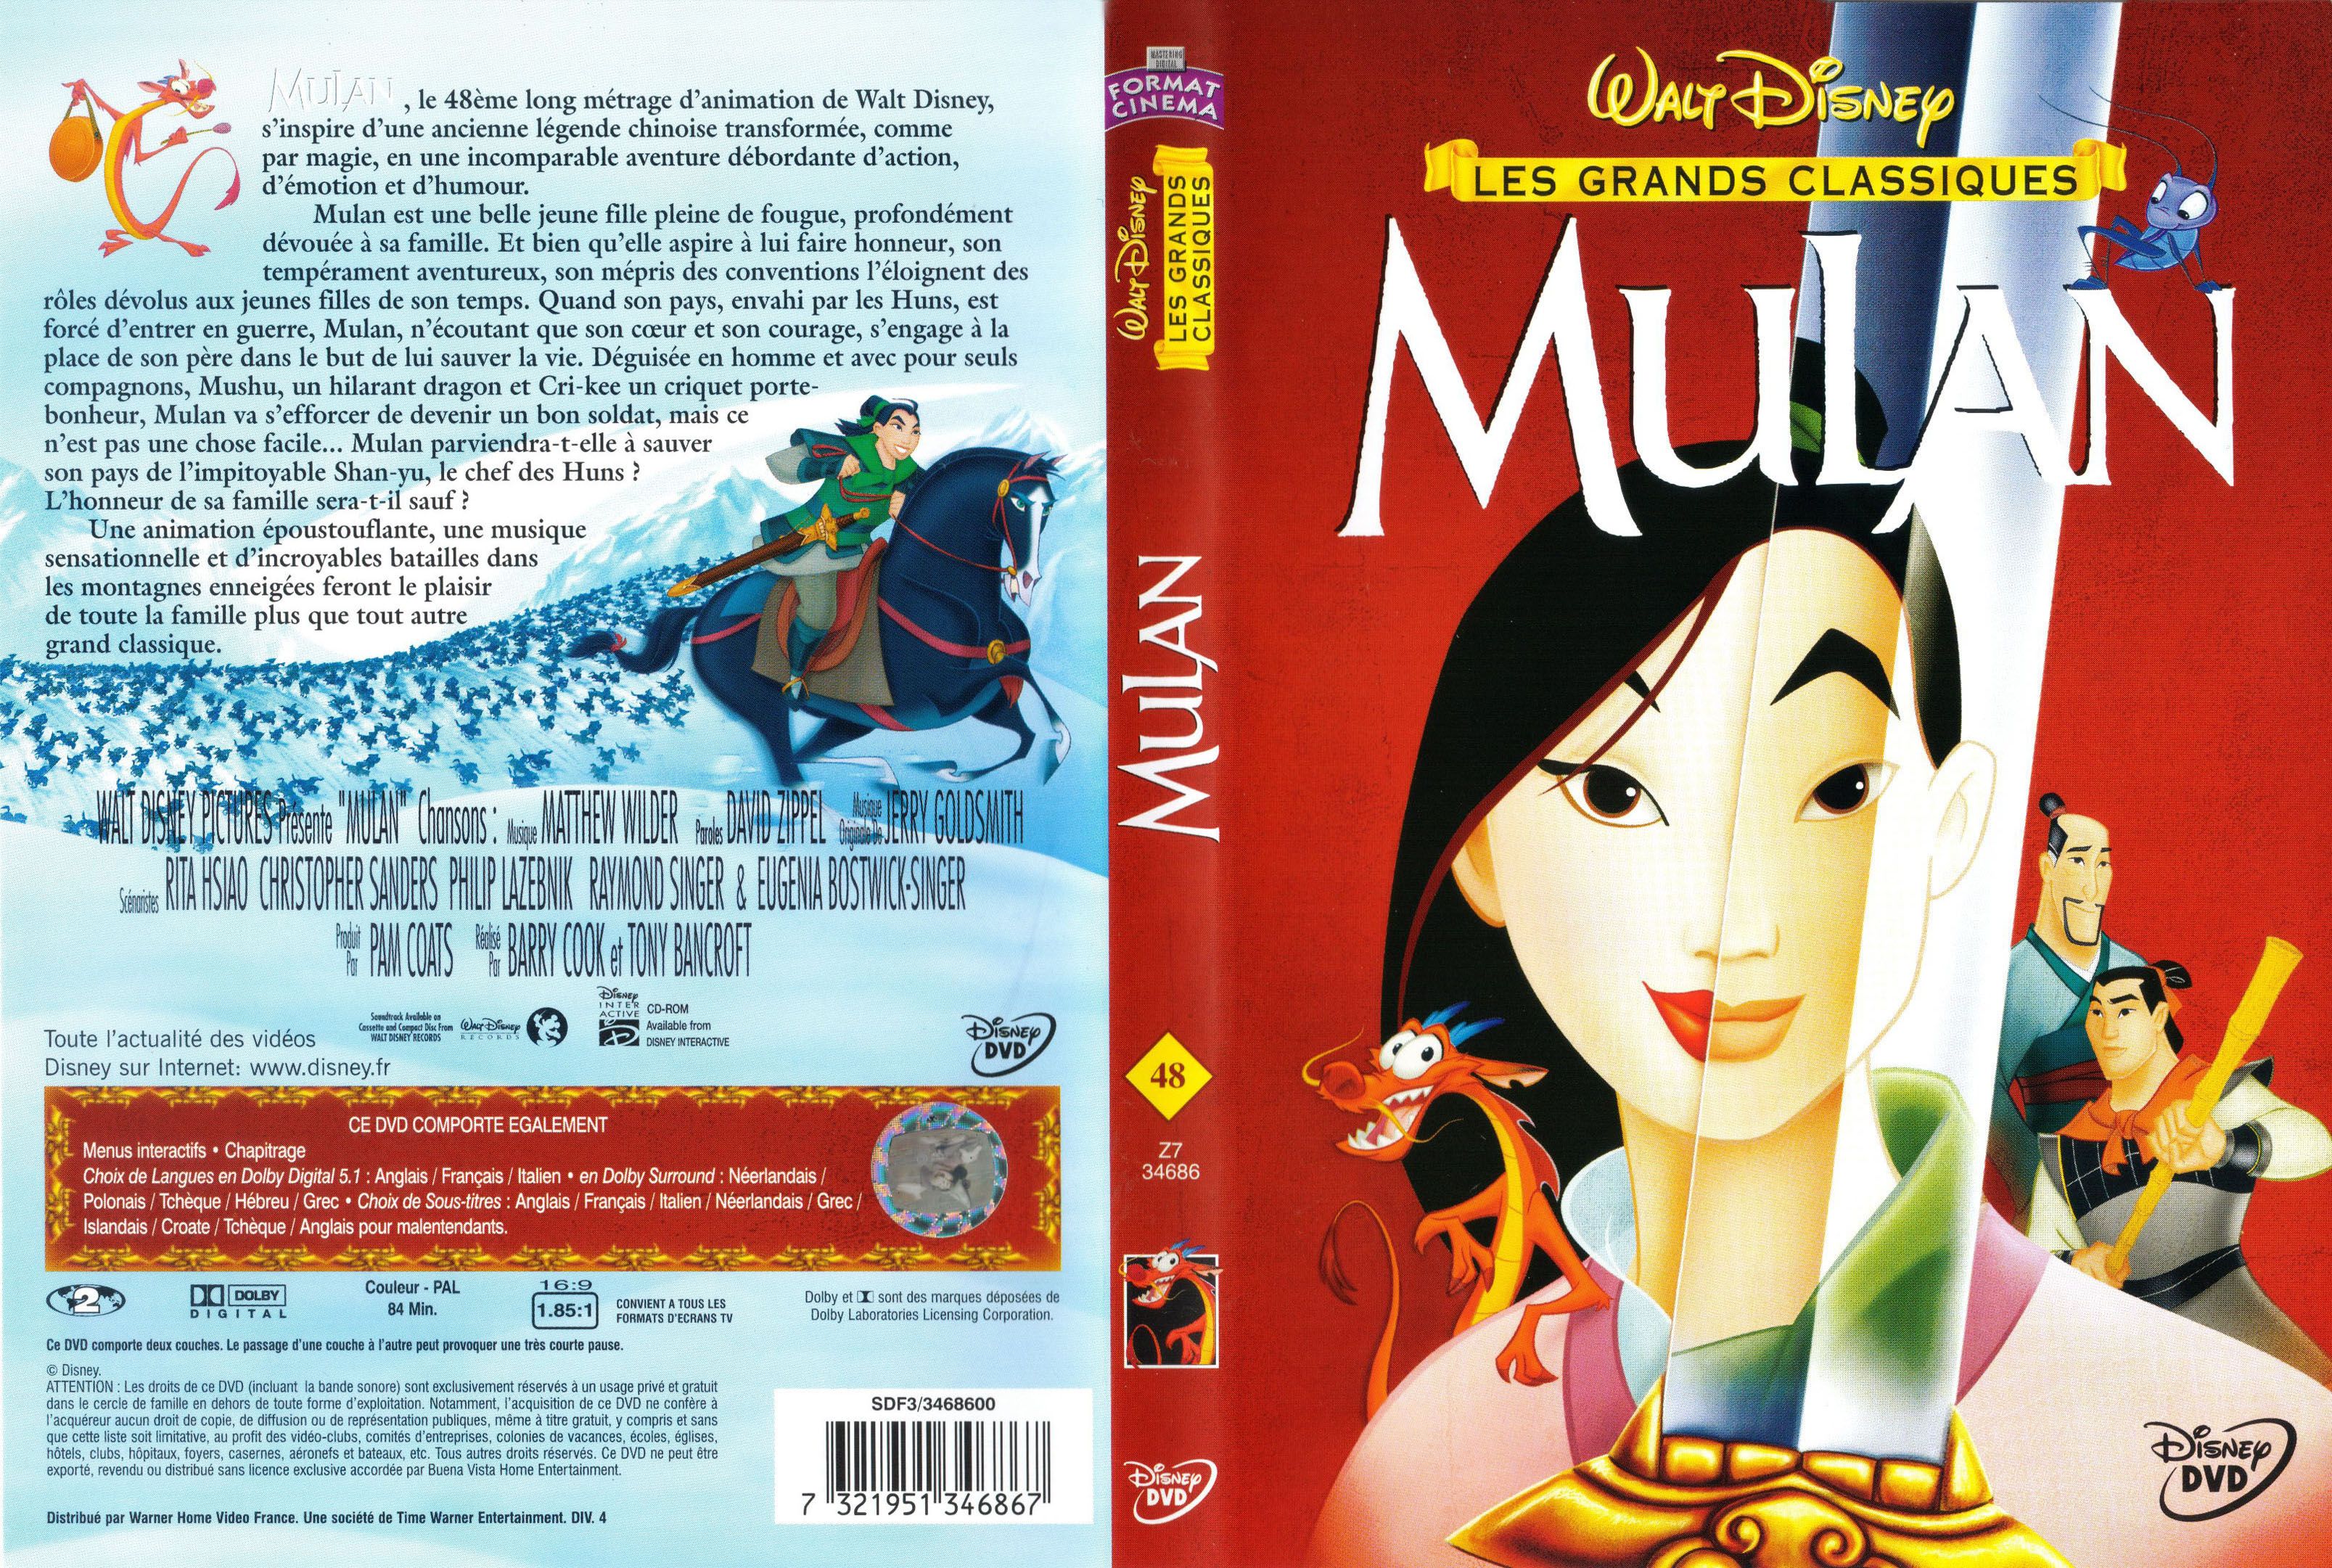 Jaquette DVD Mulan v2